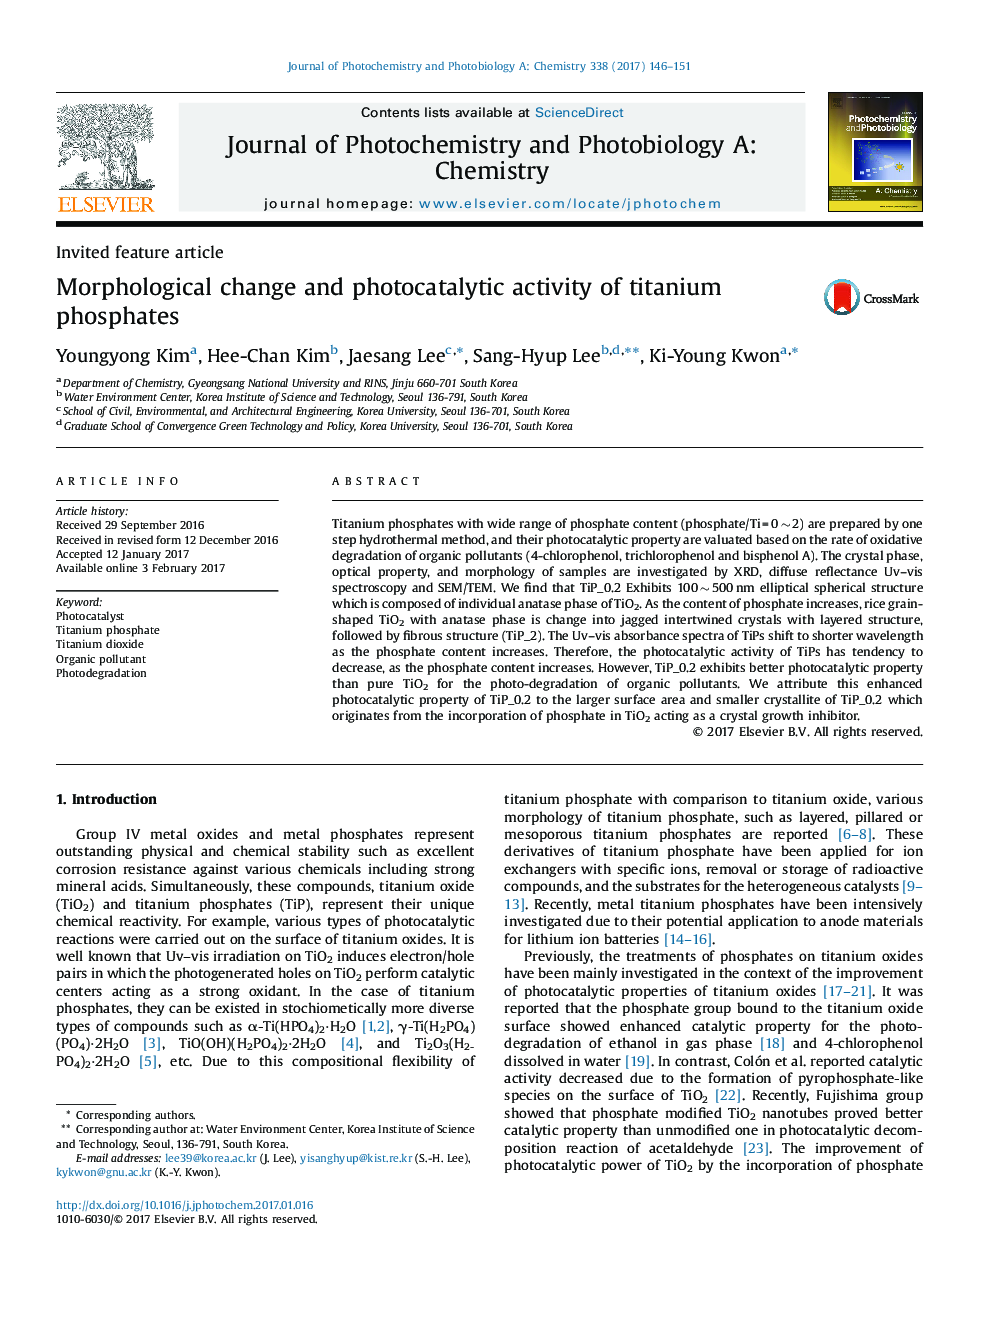 Morphological change and photocatalytic activity of titanium phosphates